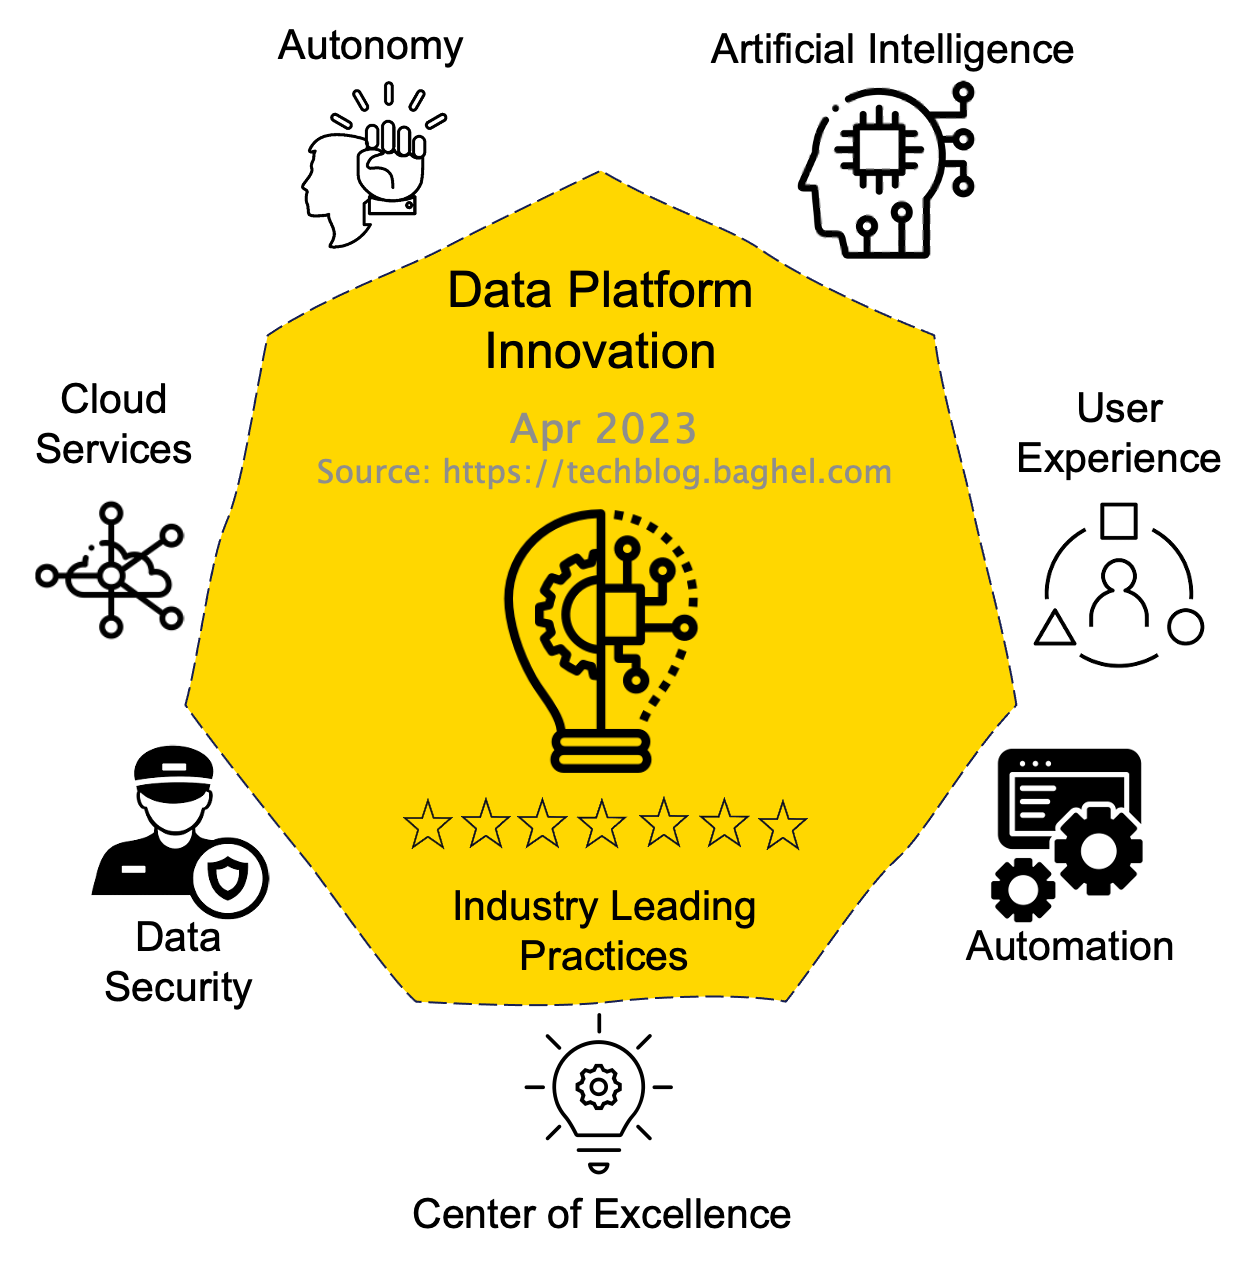 Pillars - Data Platform Innovation: Industry Leading Practices